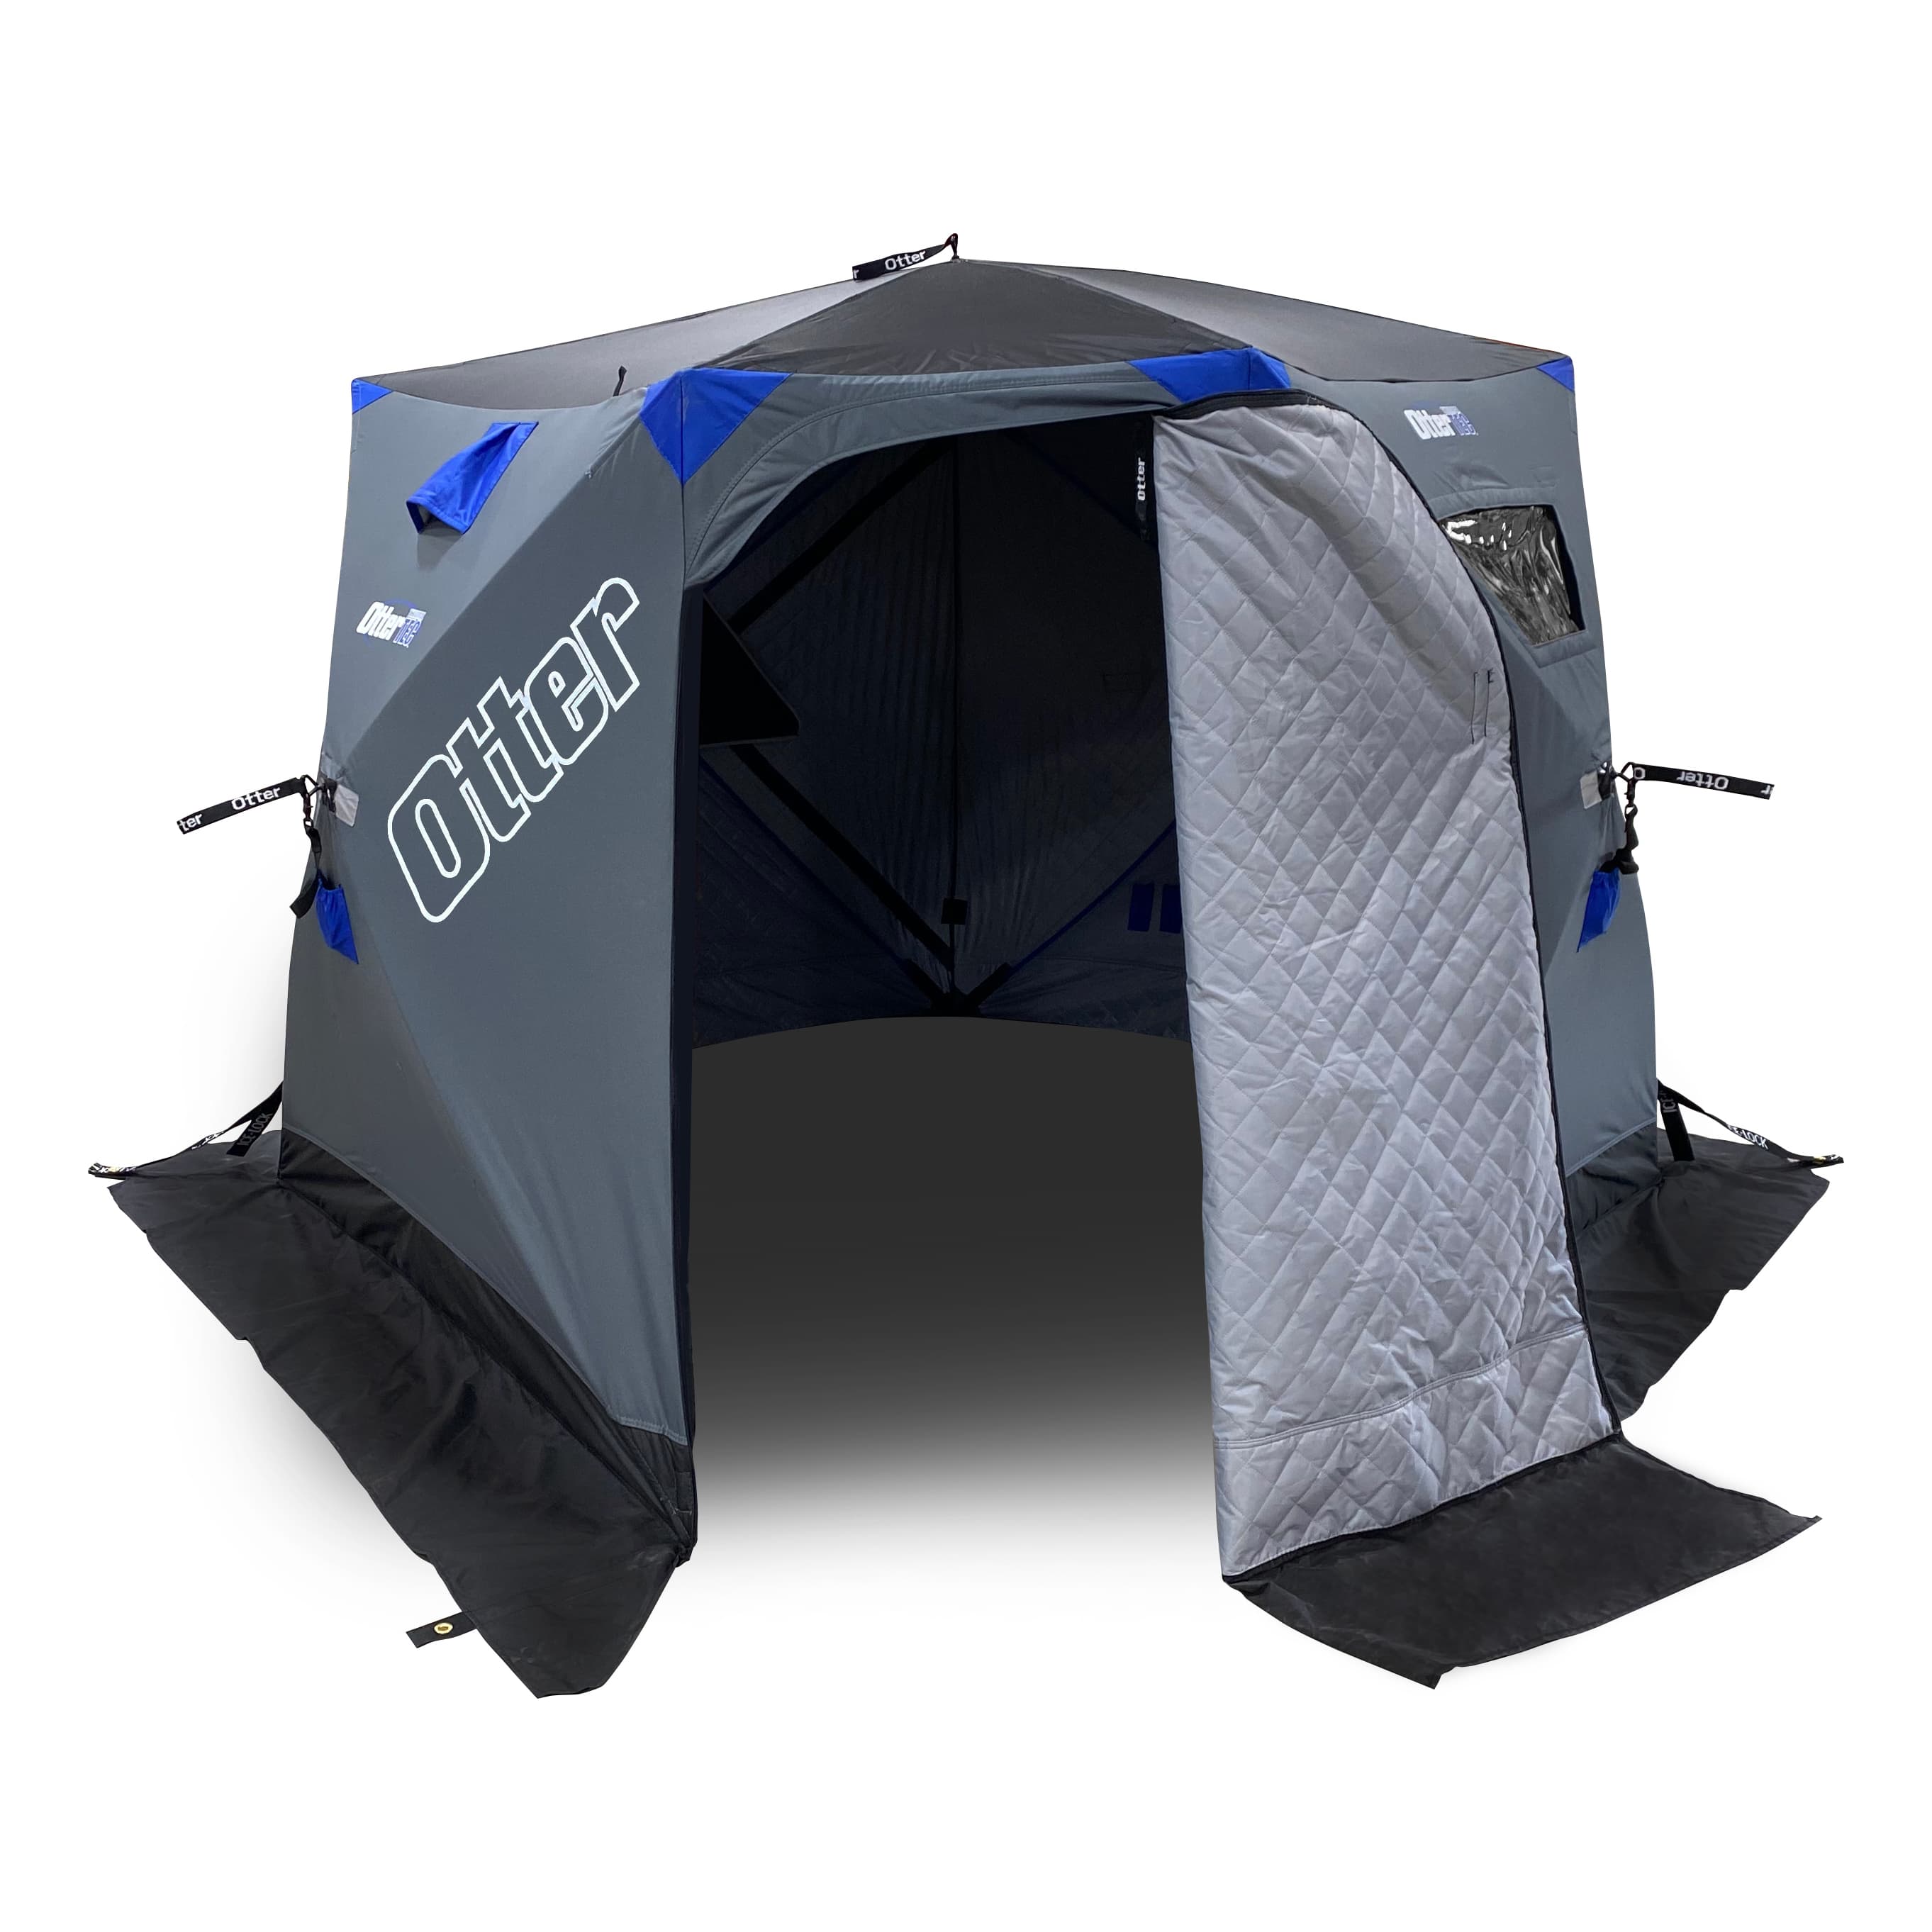 Otter® Vortex Pro Cabin Thermal Hub Shelter